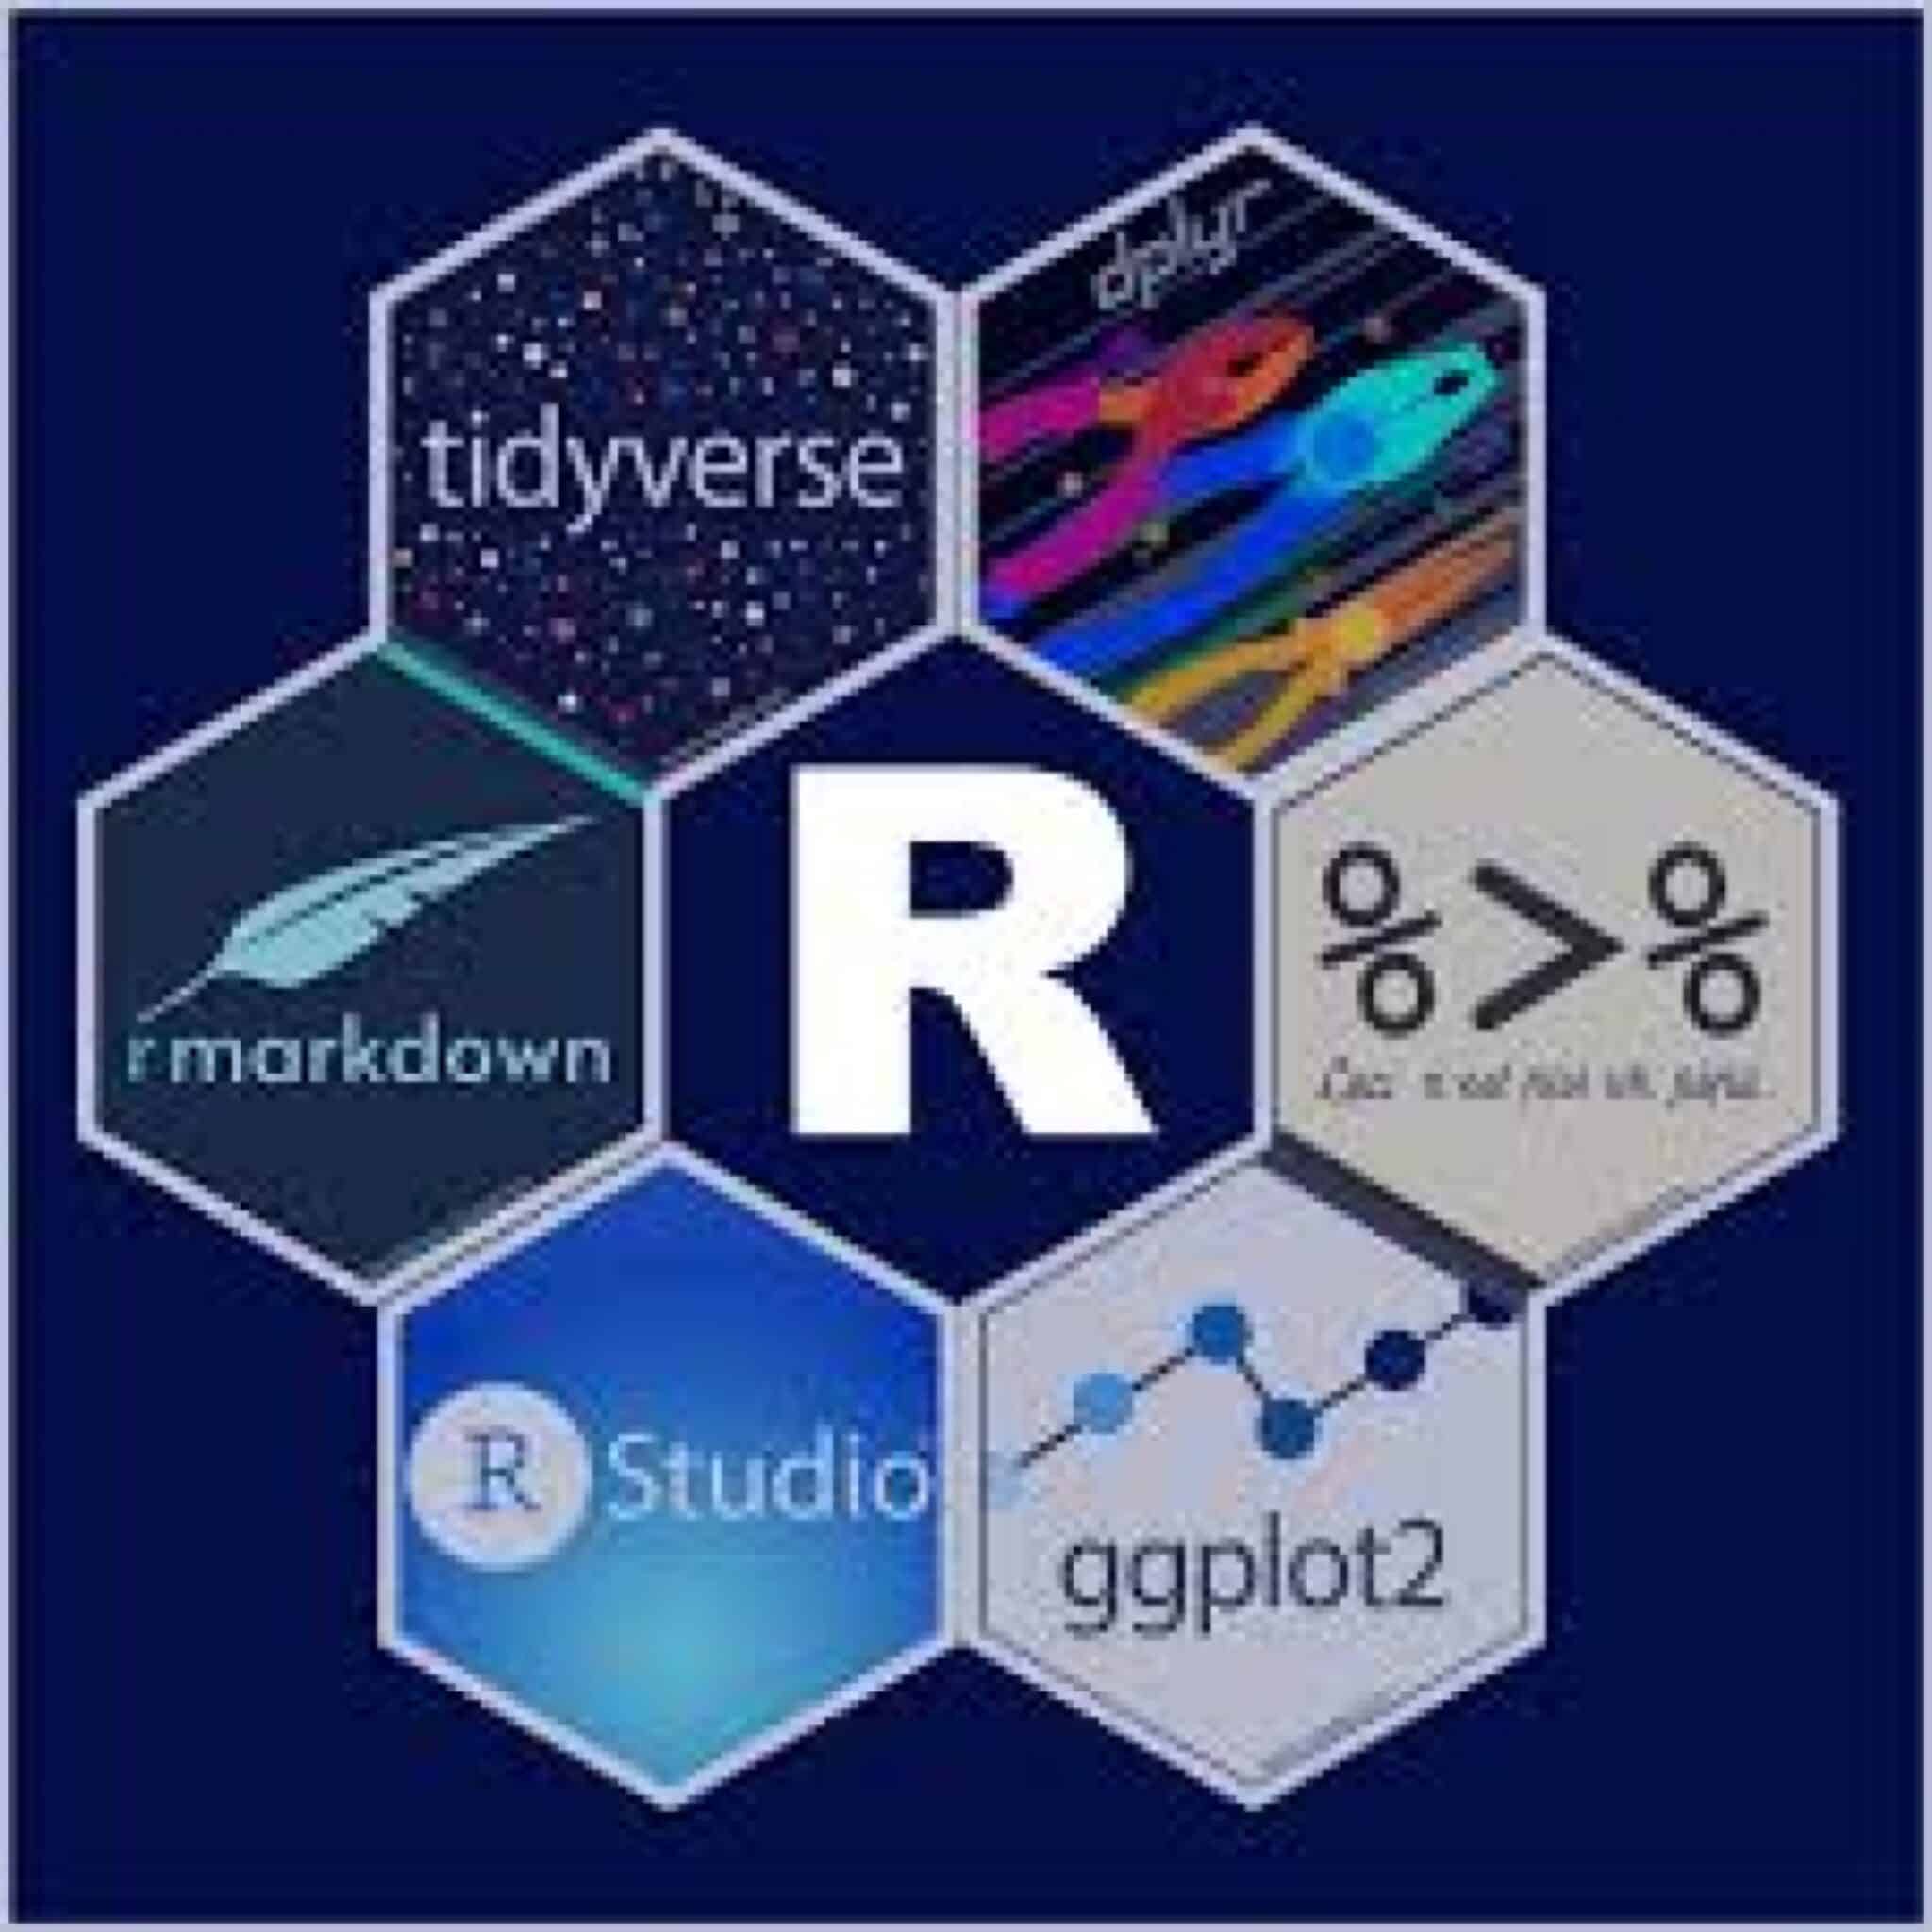 Data Analysis with R Programming